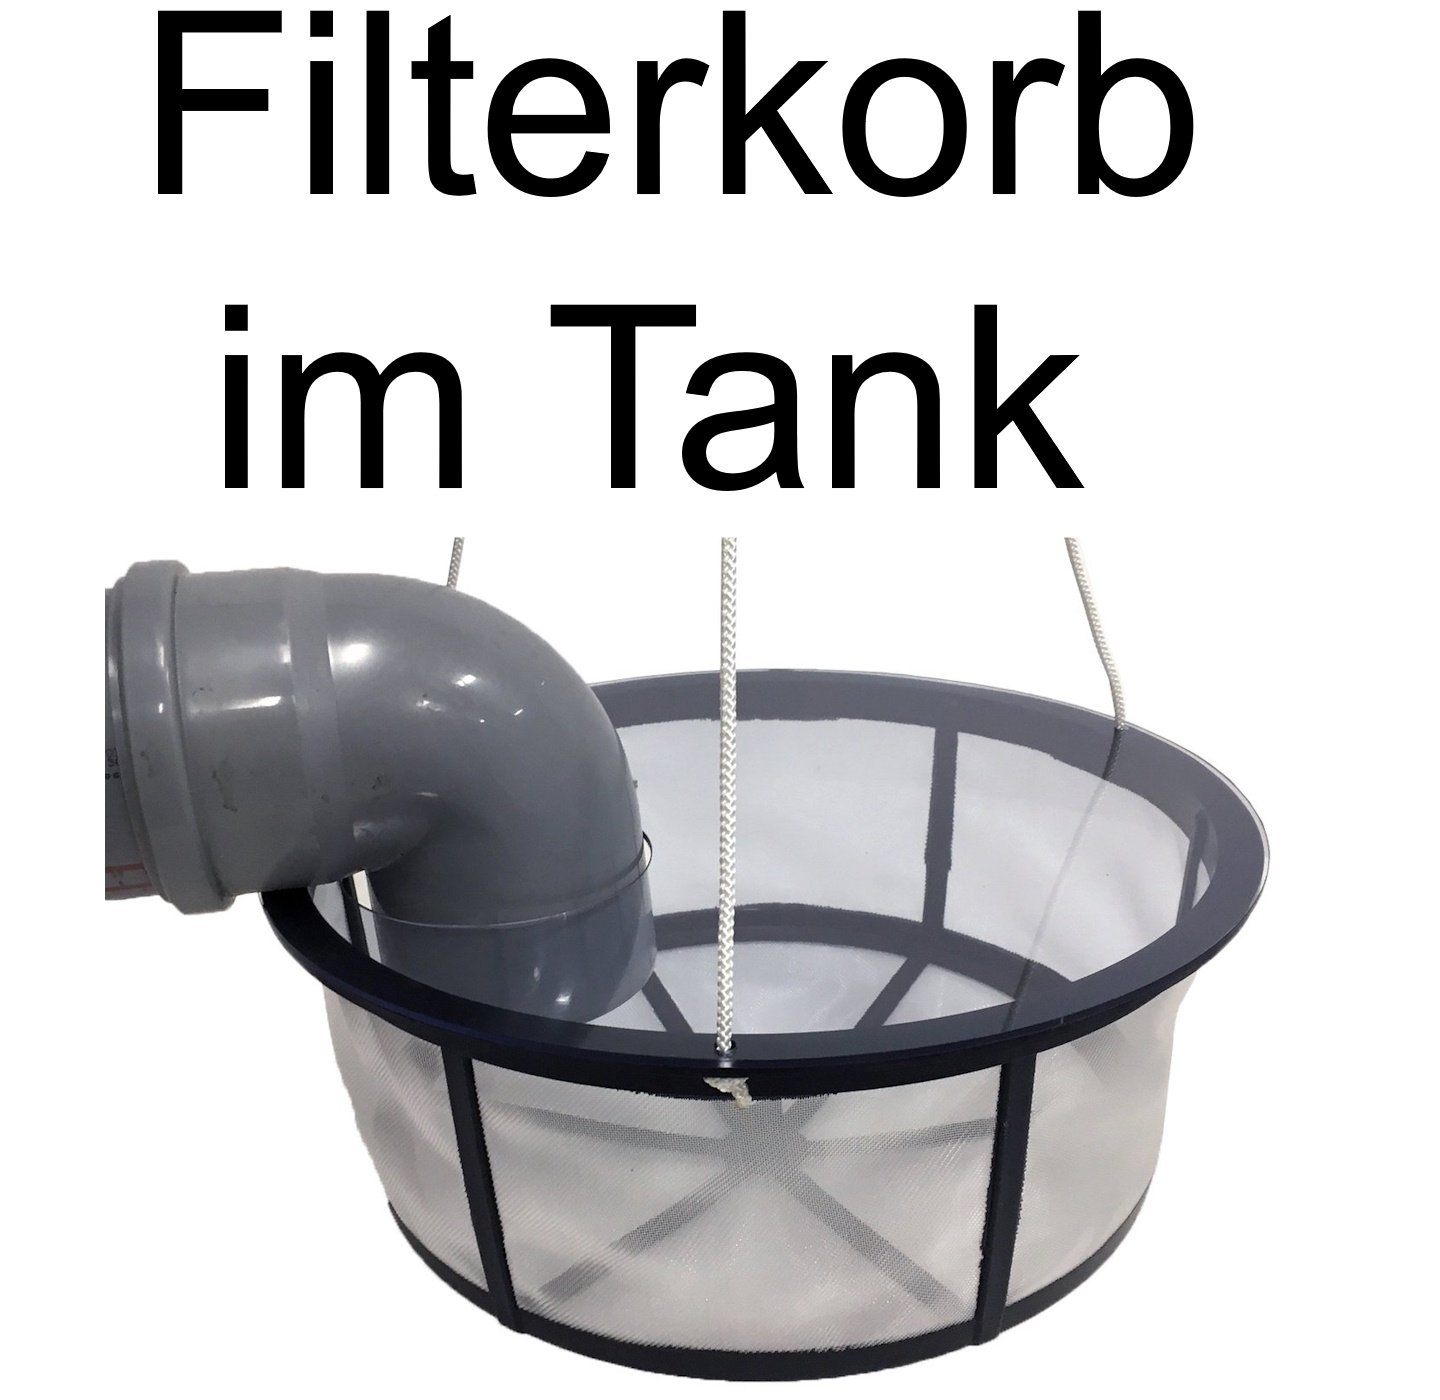 Filterkorb im Tank